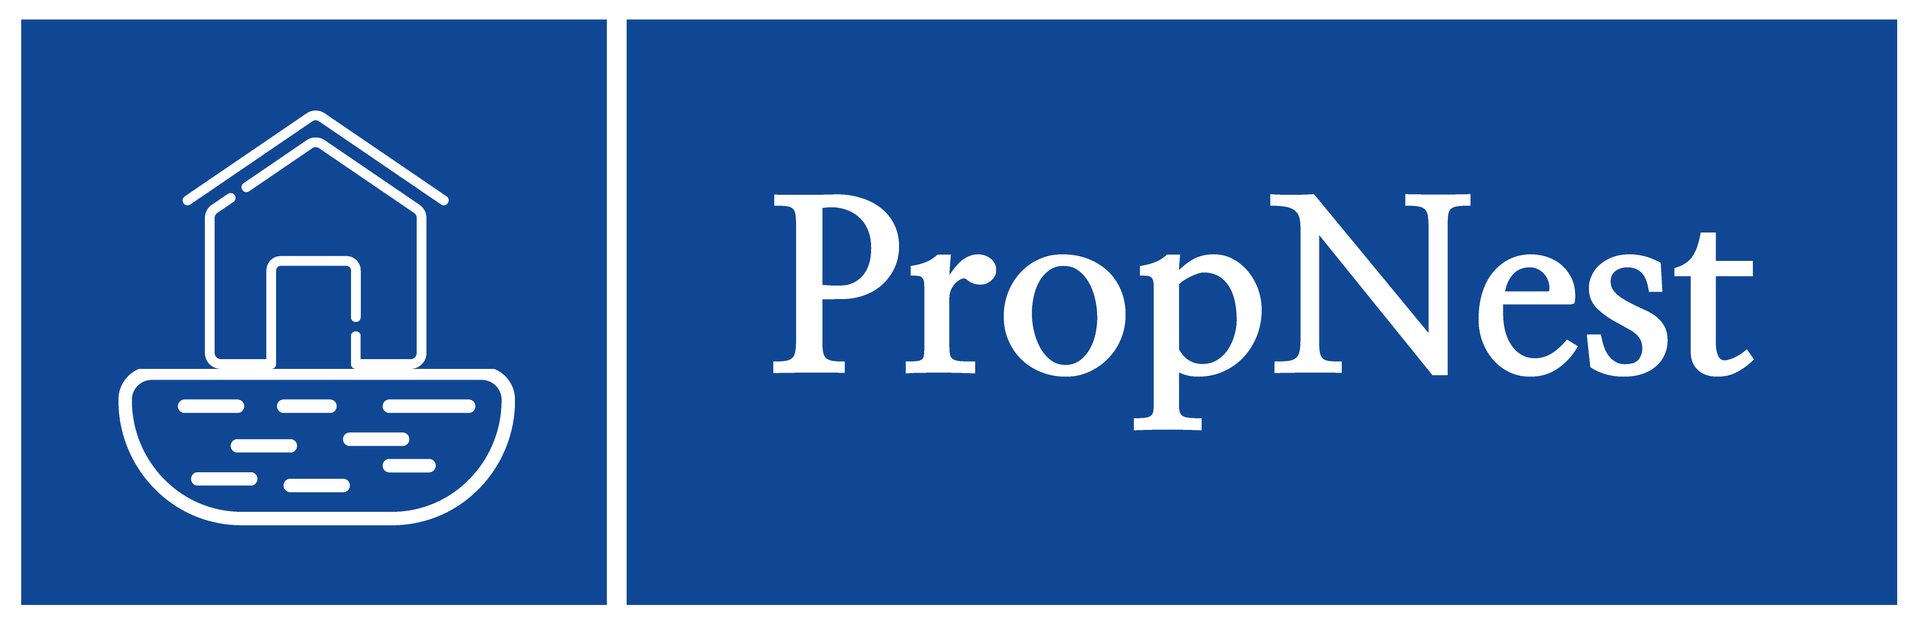 PropNest Company logo